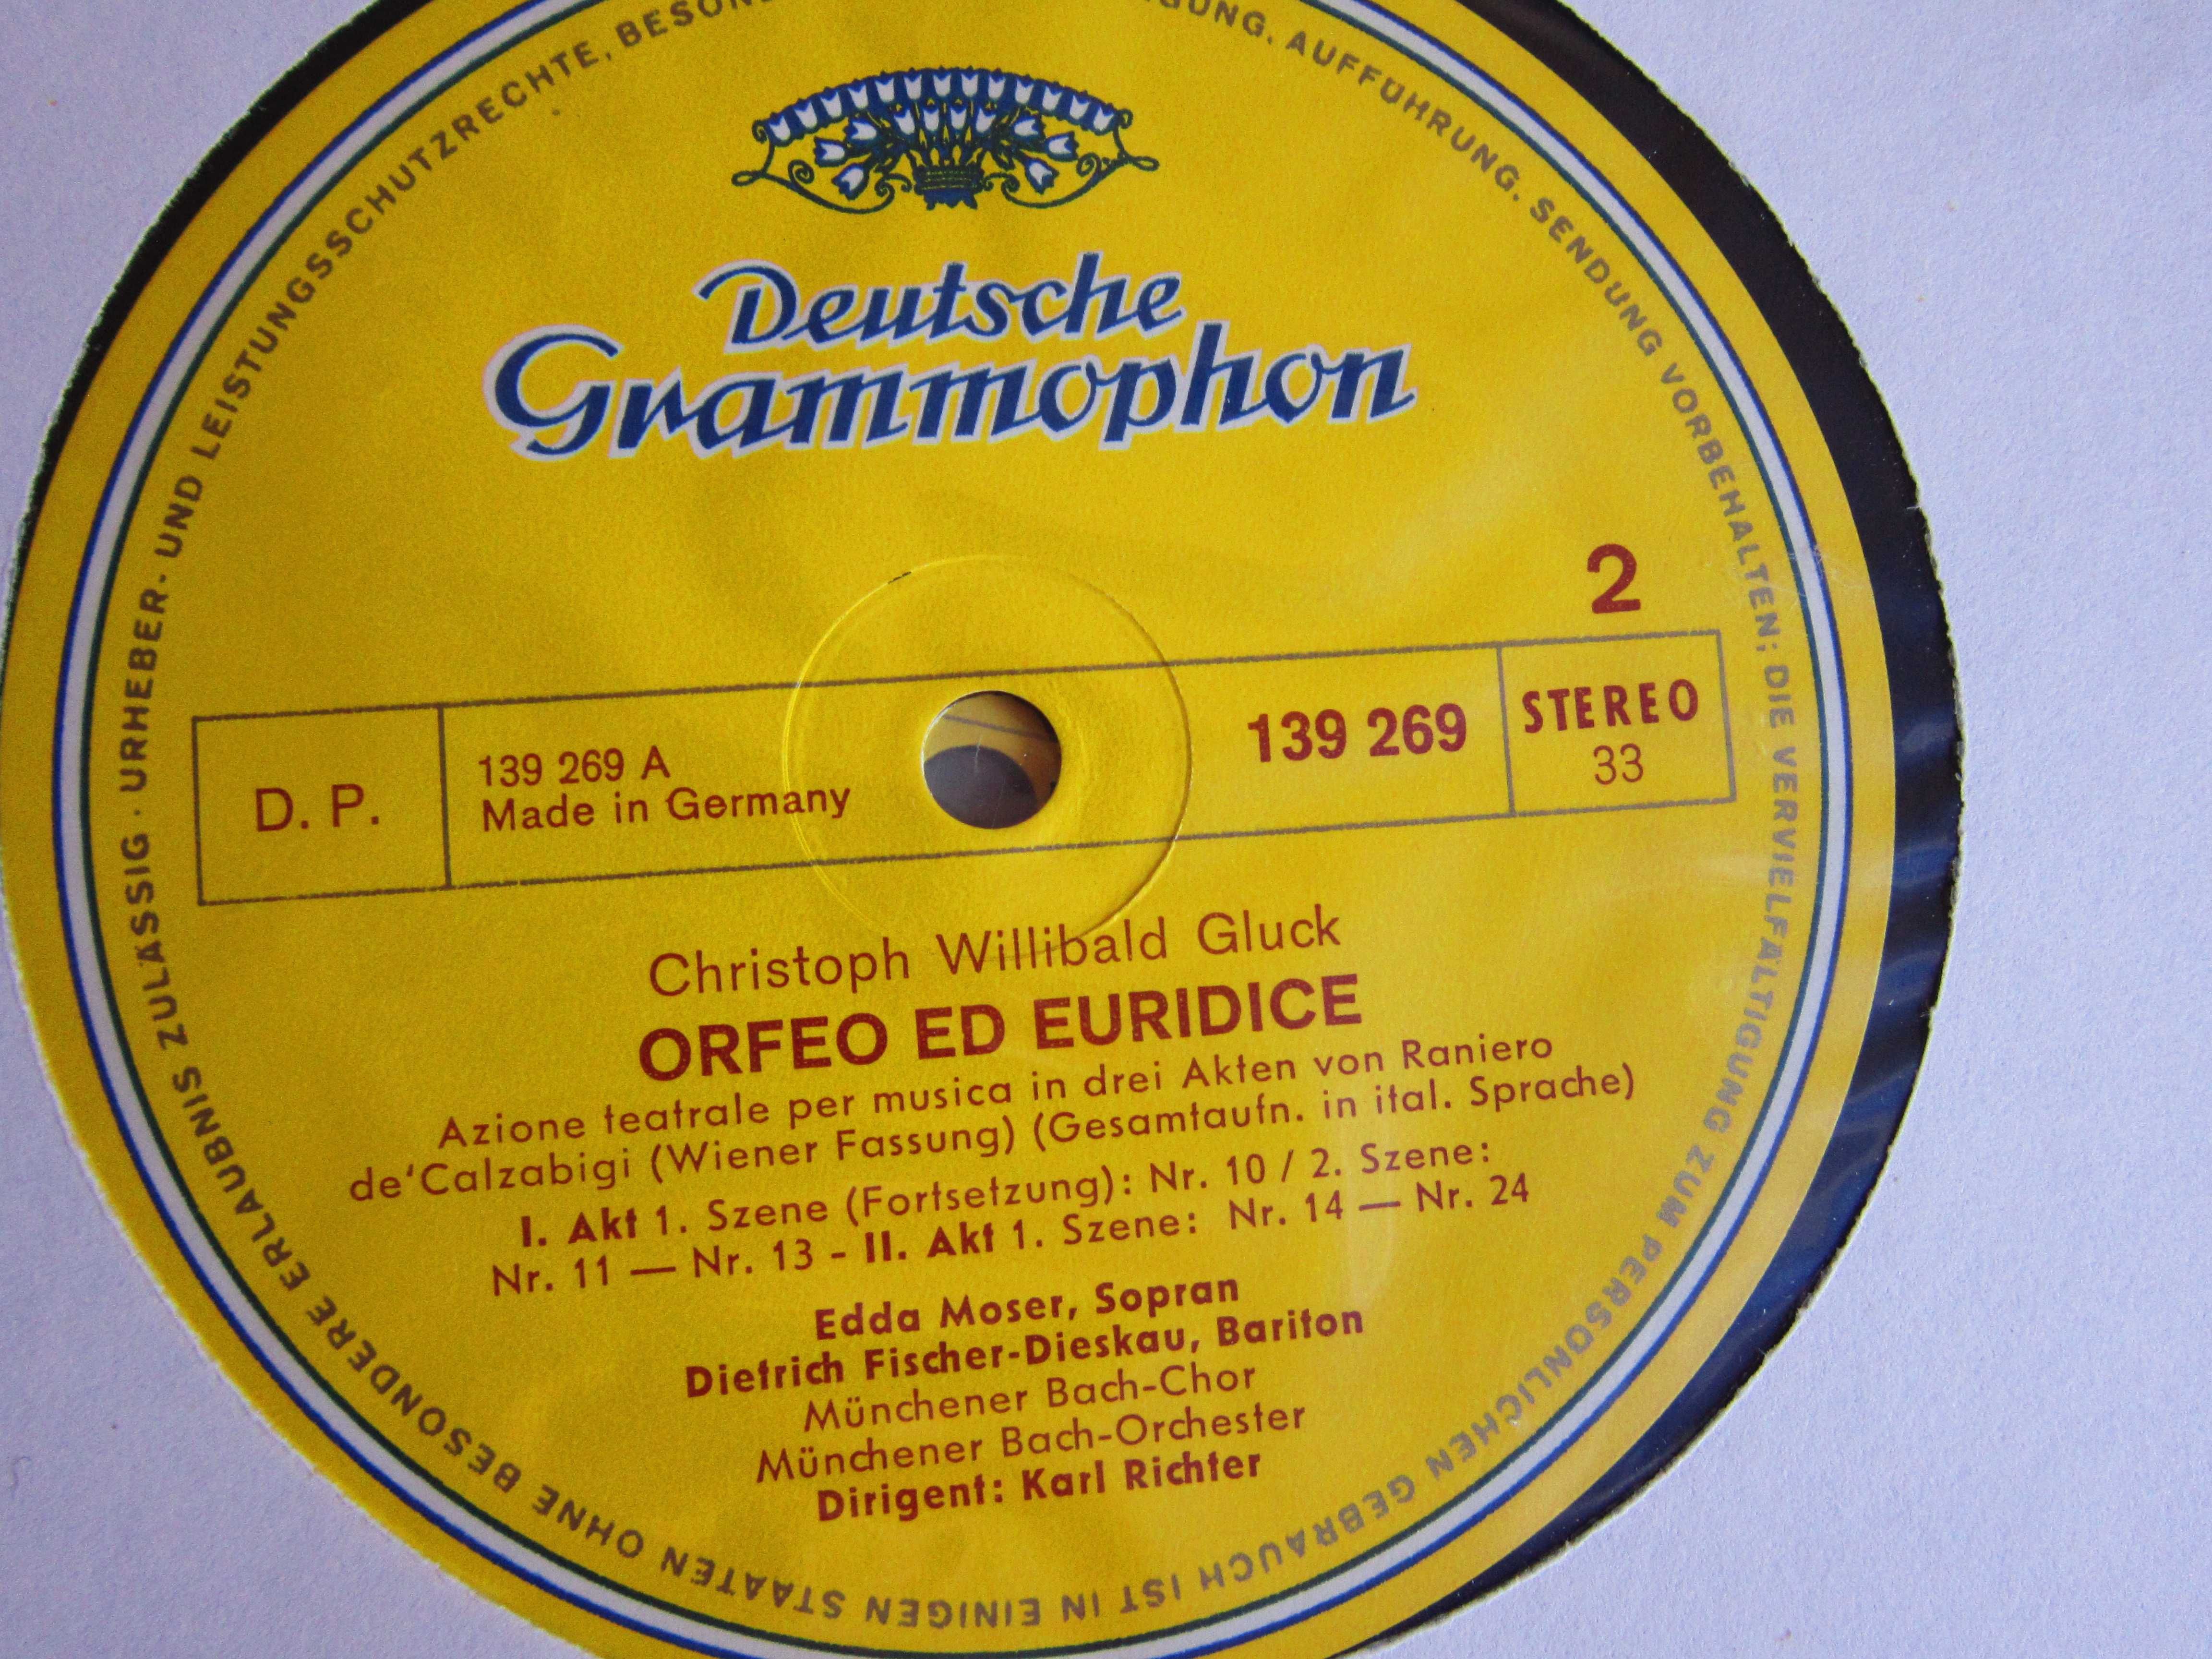 vinil Gluck -Orfeu și Euridice (originale in italiano) Karl Richter